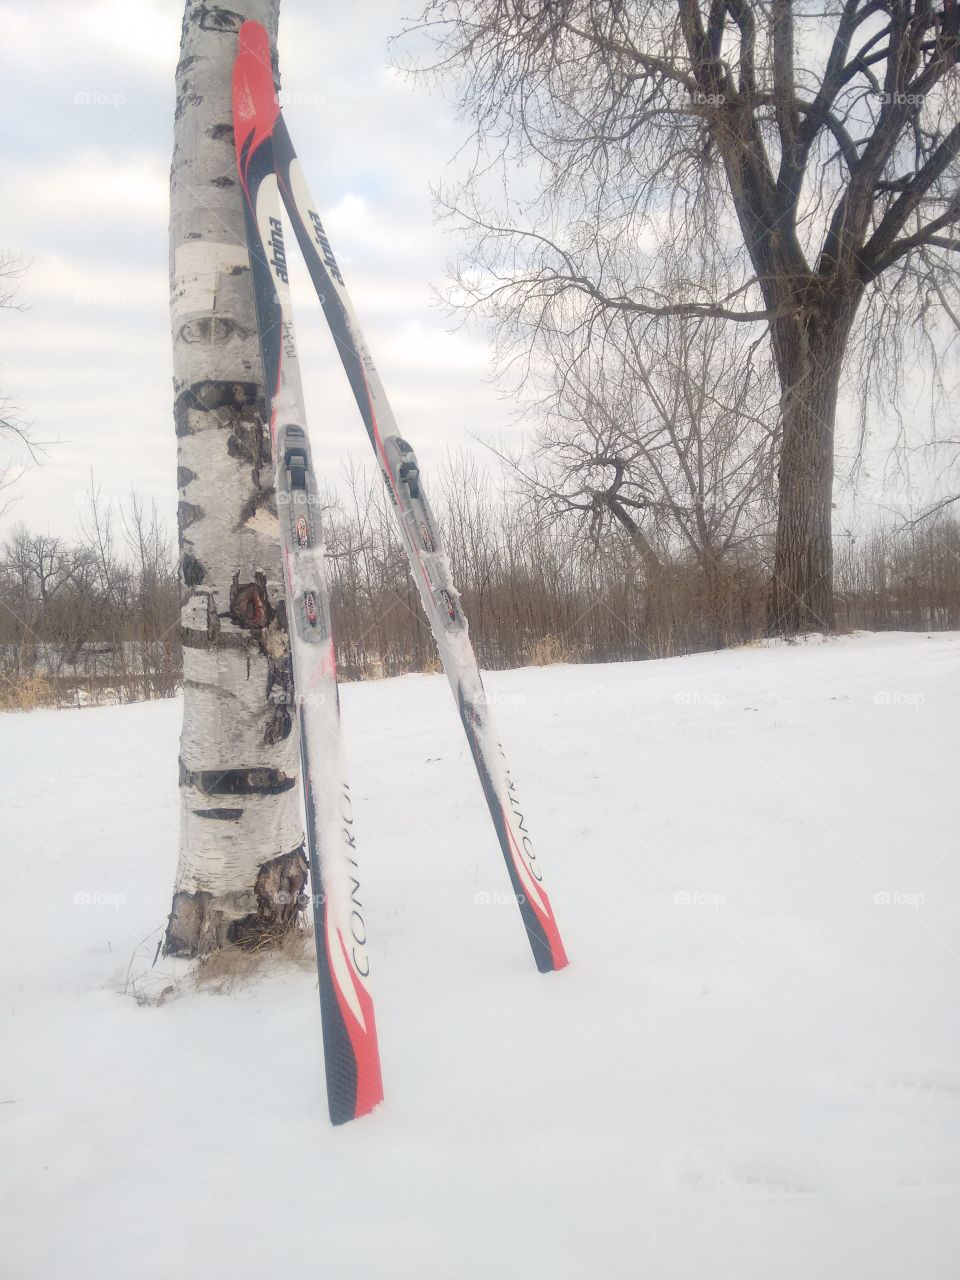 Icy skiing